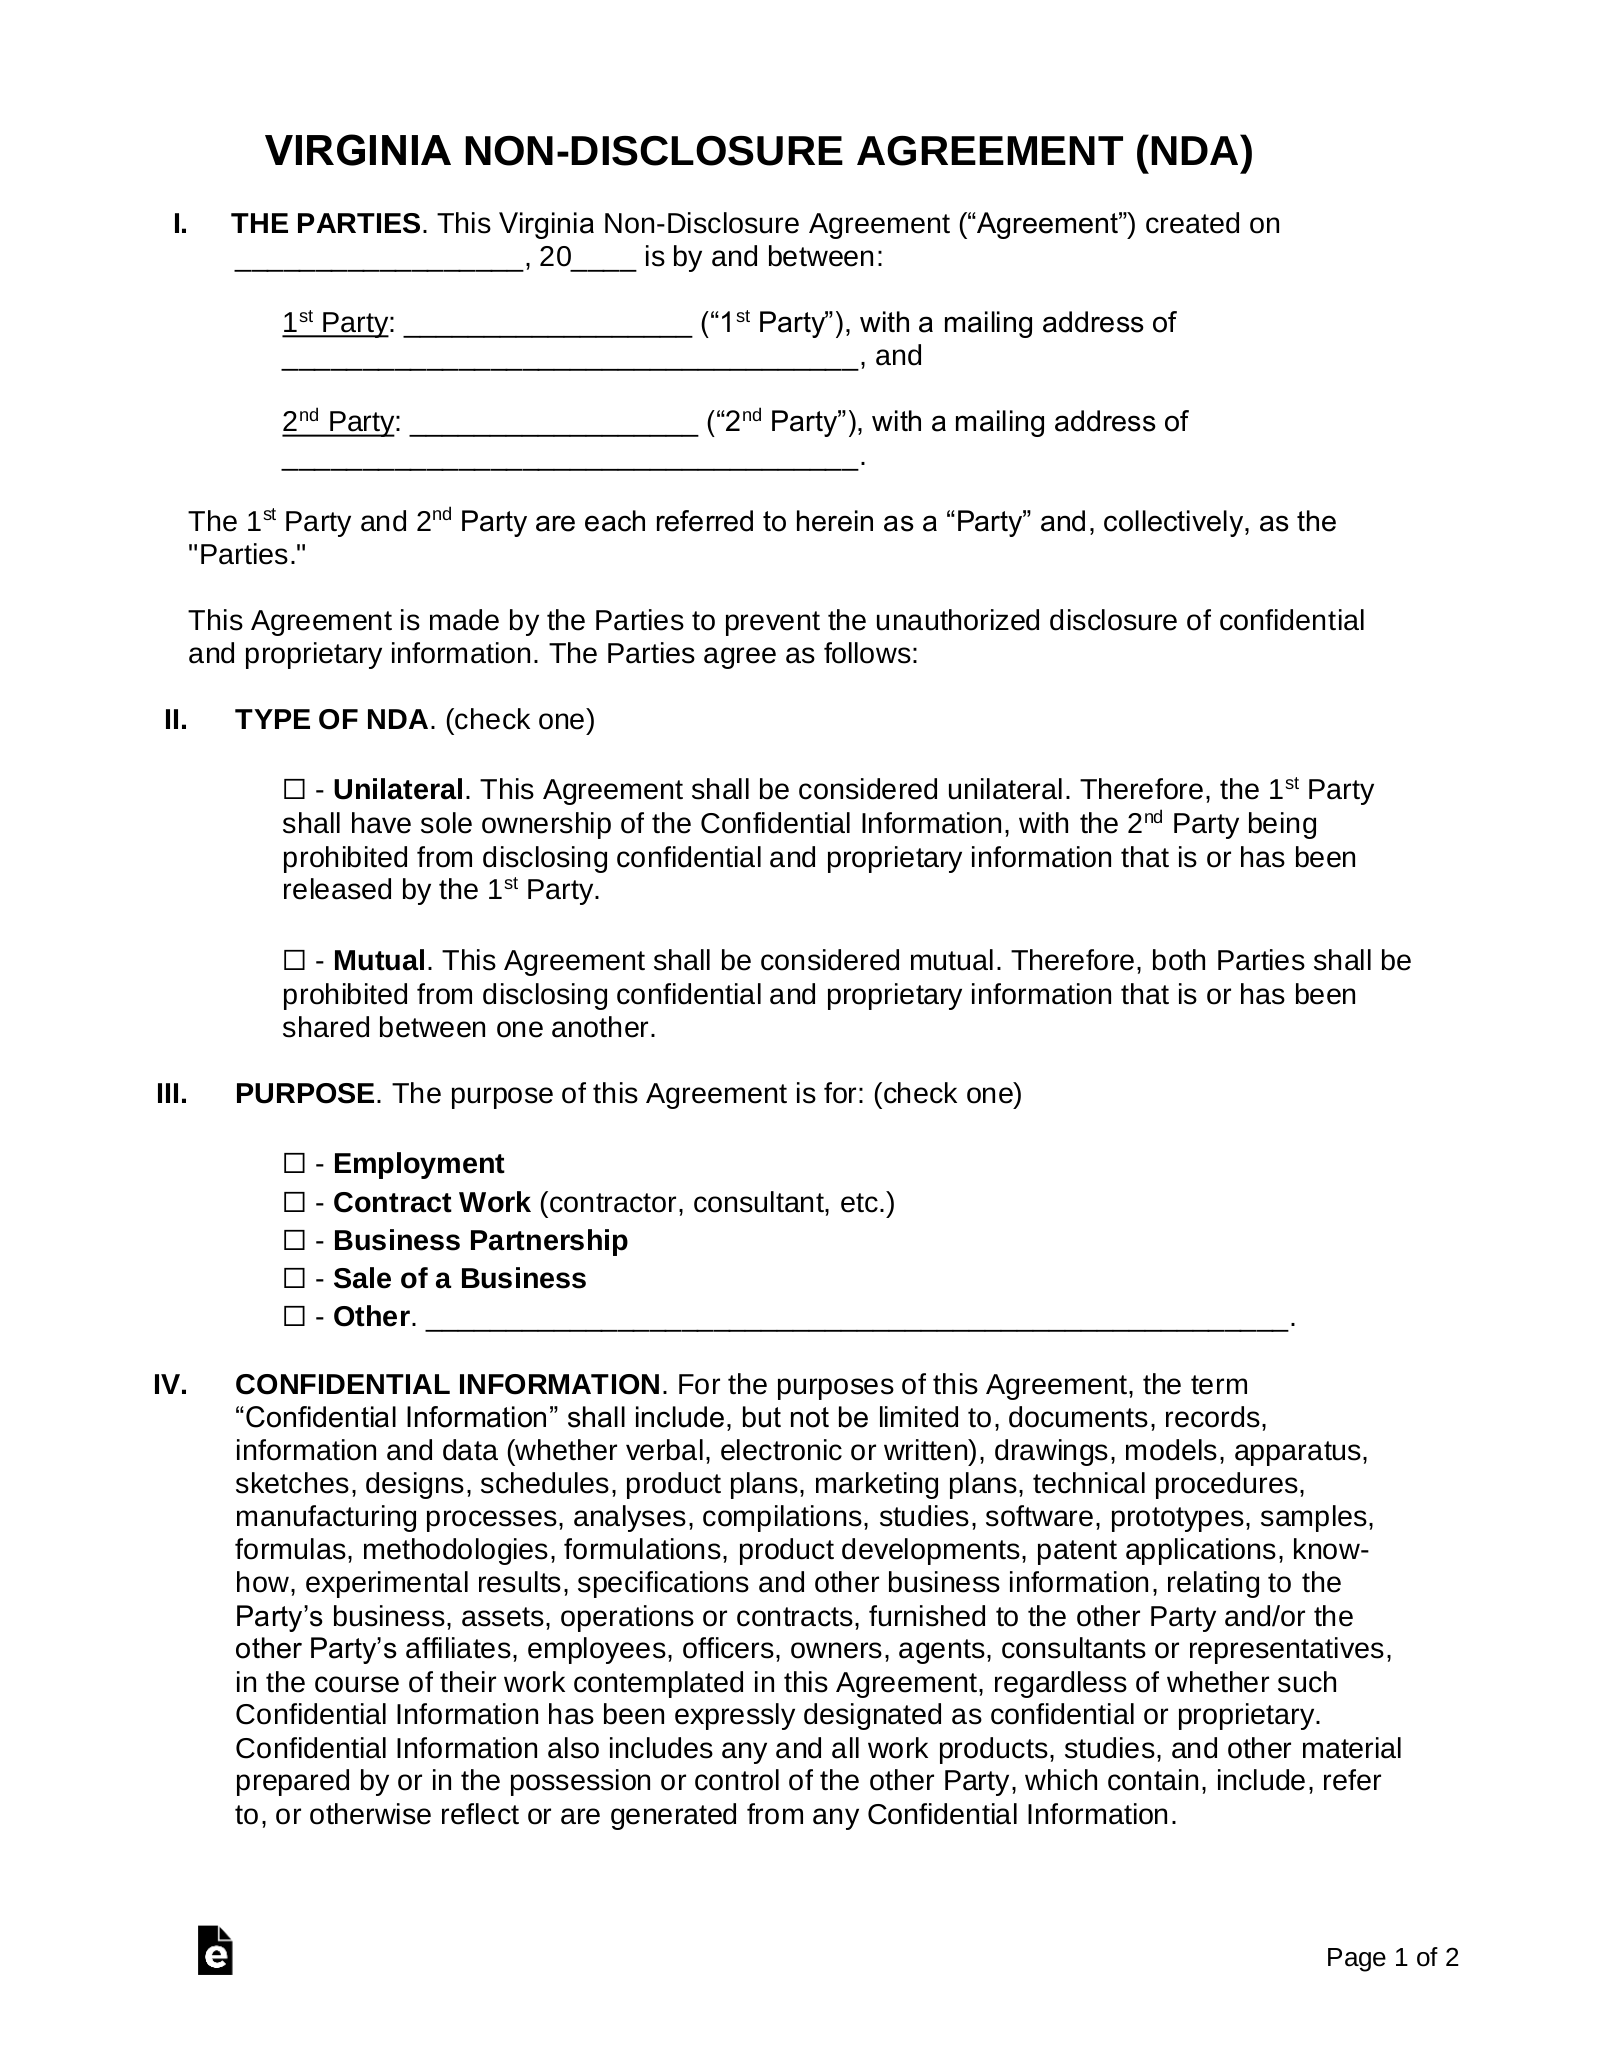 Virginia Non-Disclosure Agreement (NDA) Template